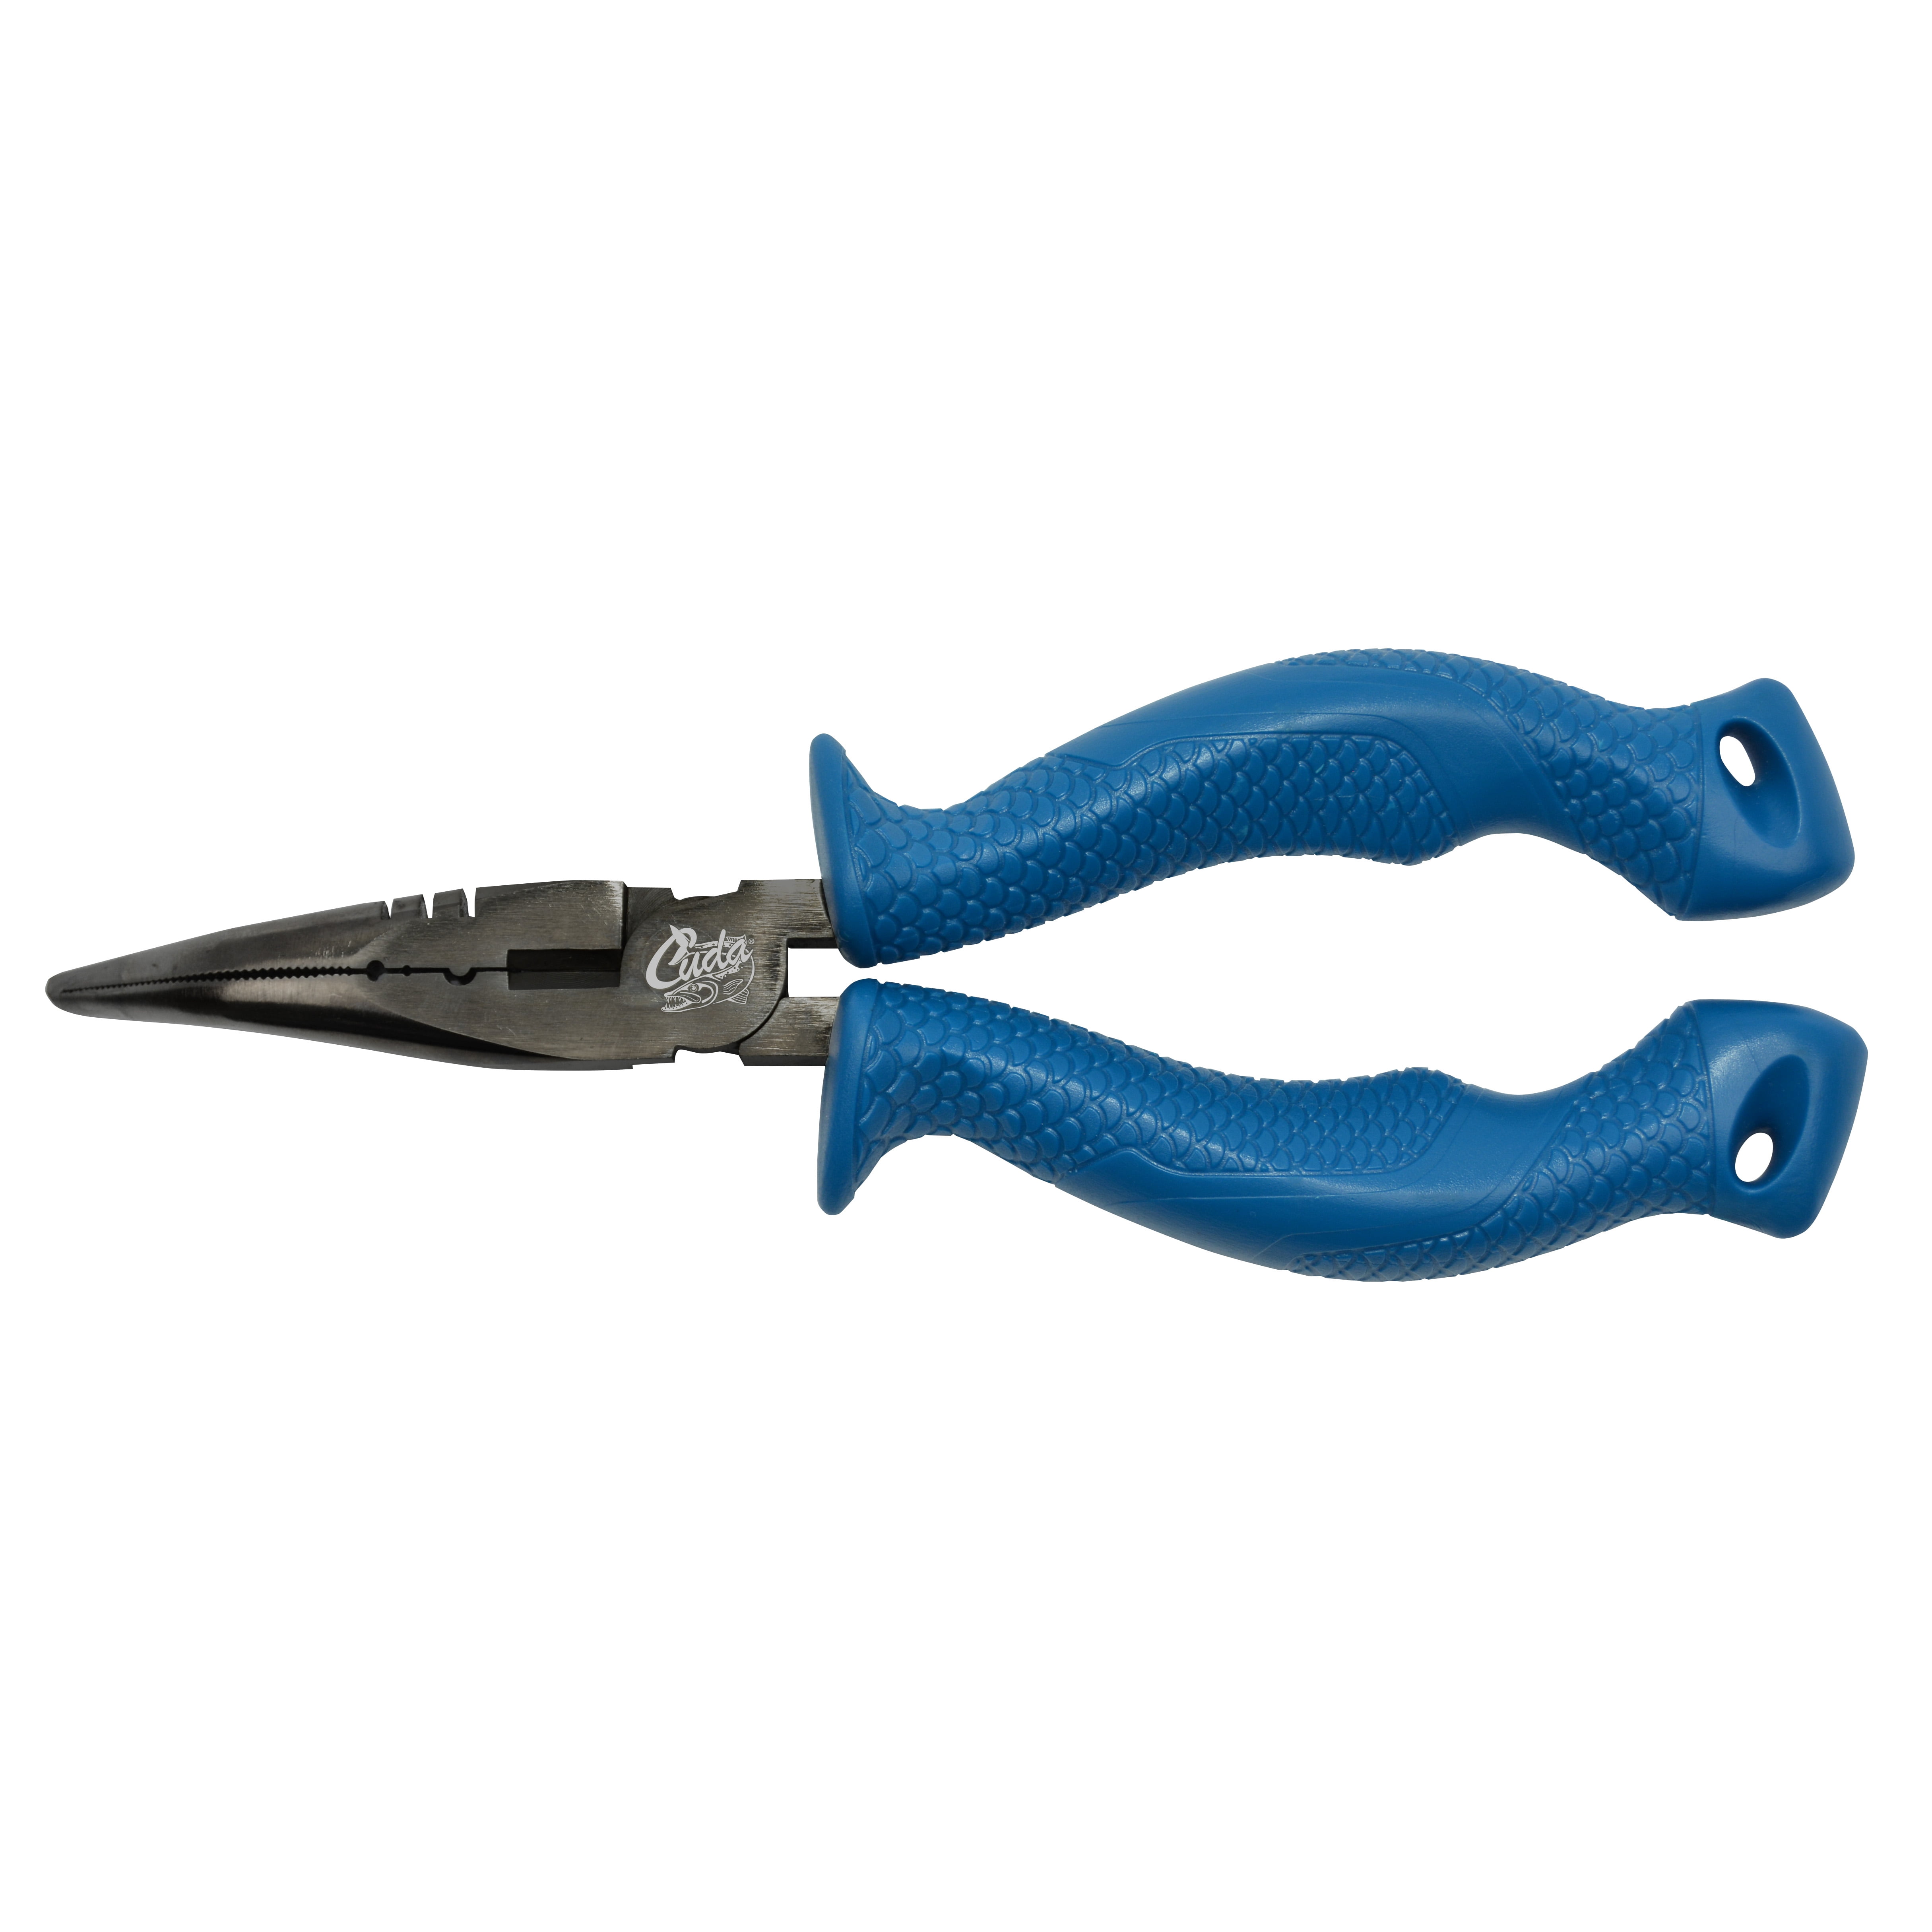 GMMGLT Fishing Plier Waterproof Multifunctional Plastic Split Hook Remover Line Cutter for Fishing, Size: 25, Blue